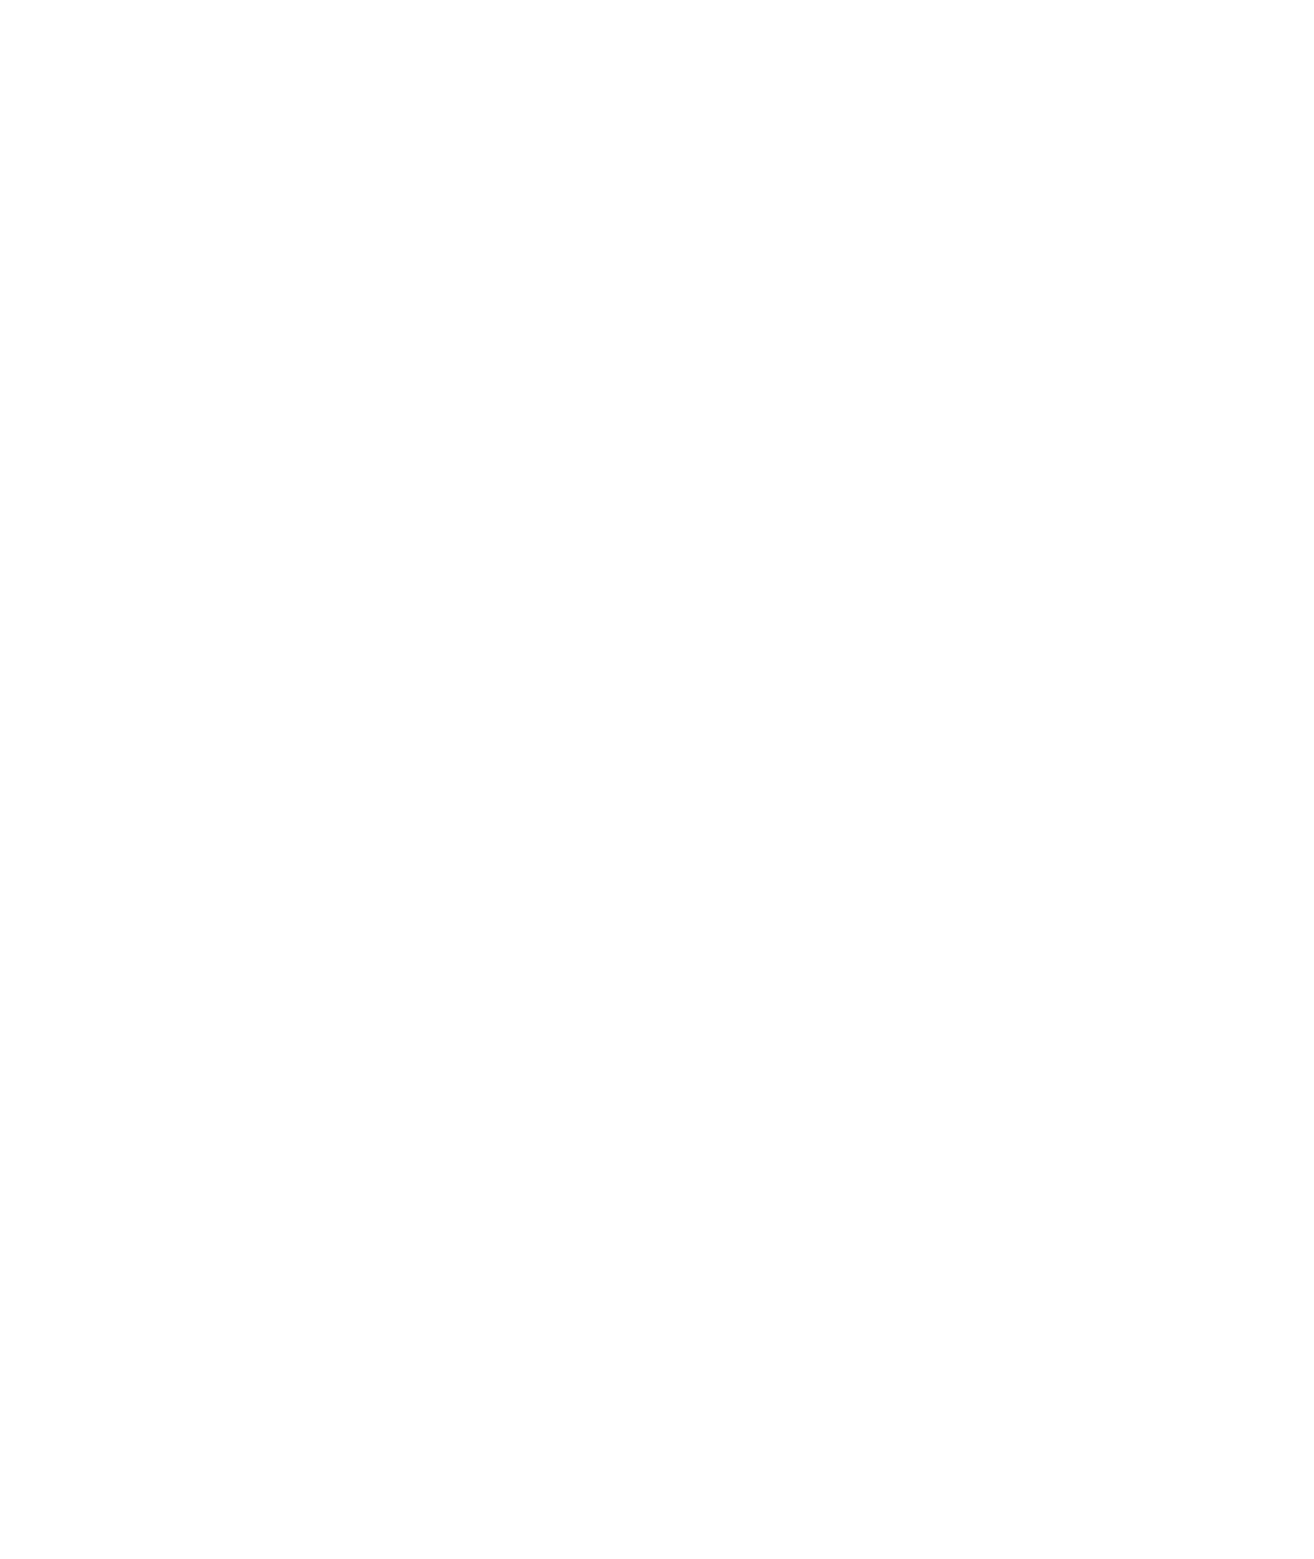 Asiasoft logo for dark backgrounds (transparent PNG)